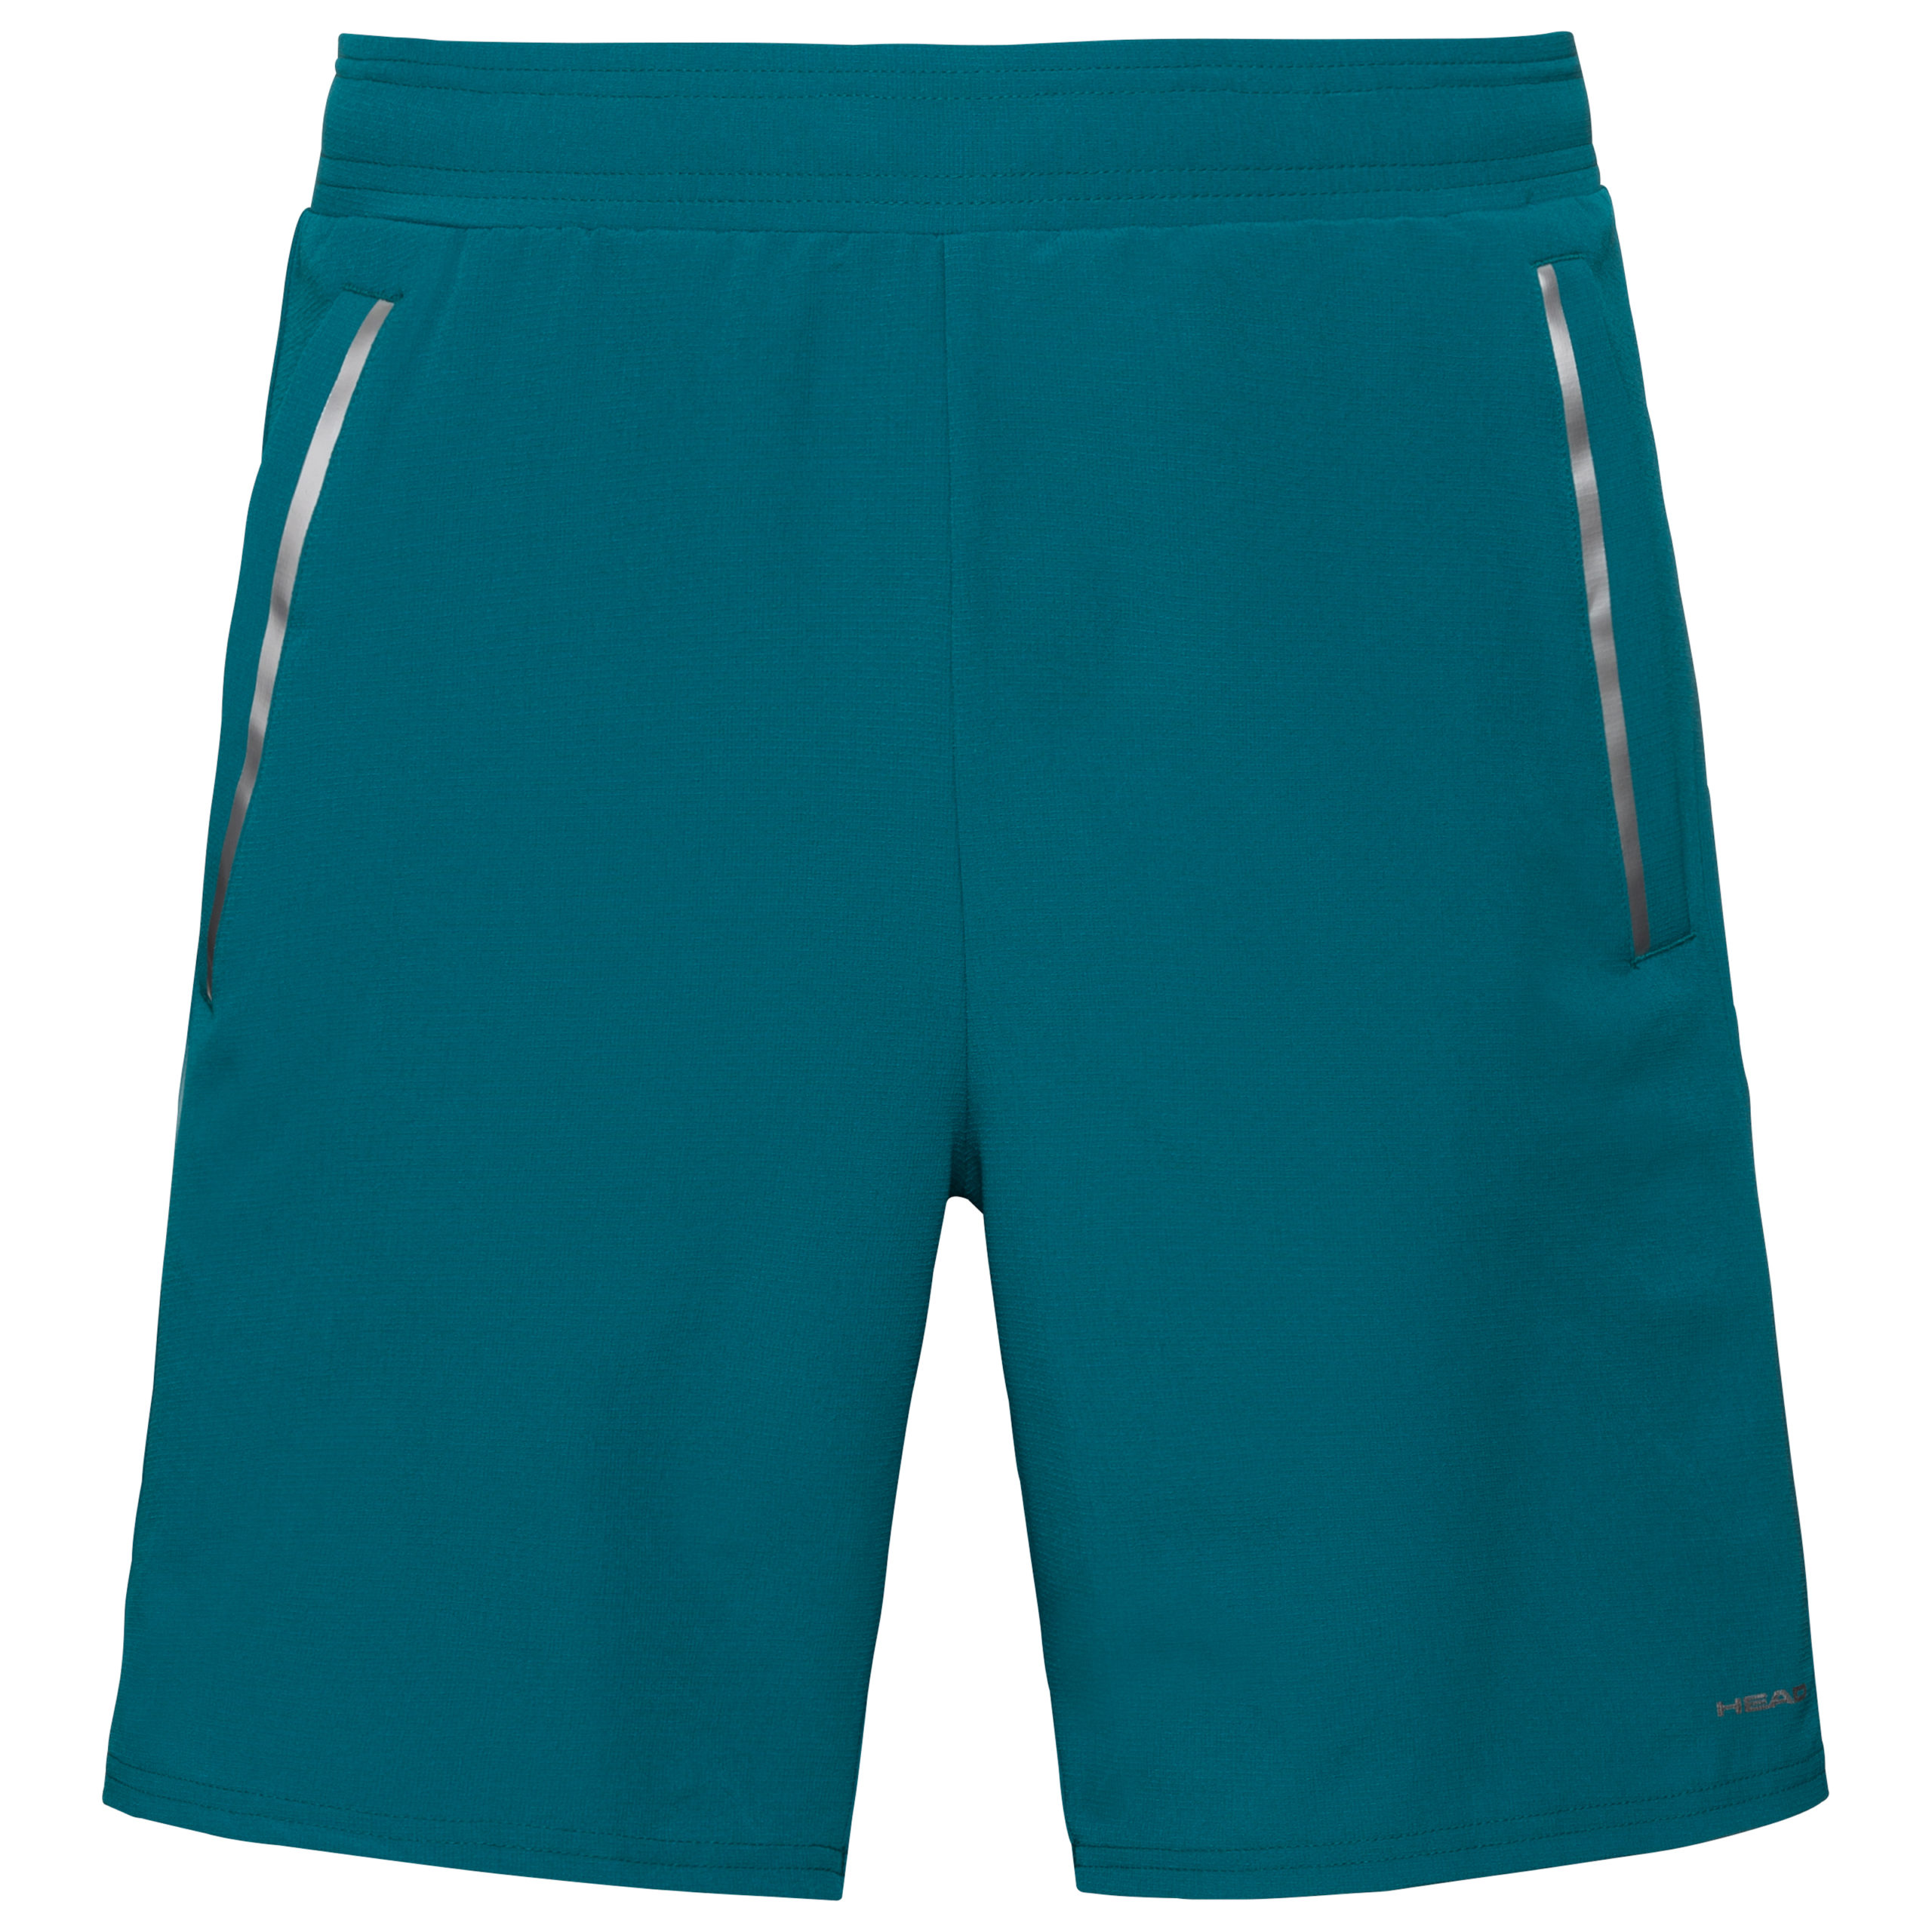 PERF shorts M - Cool Sport